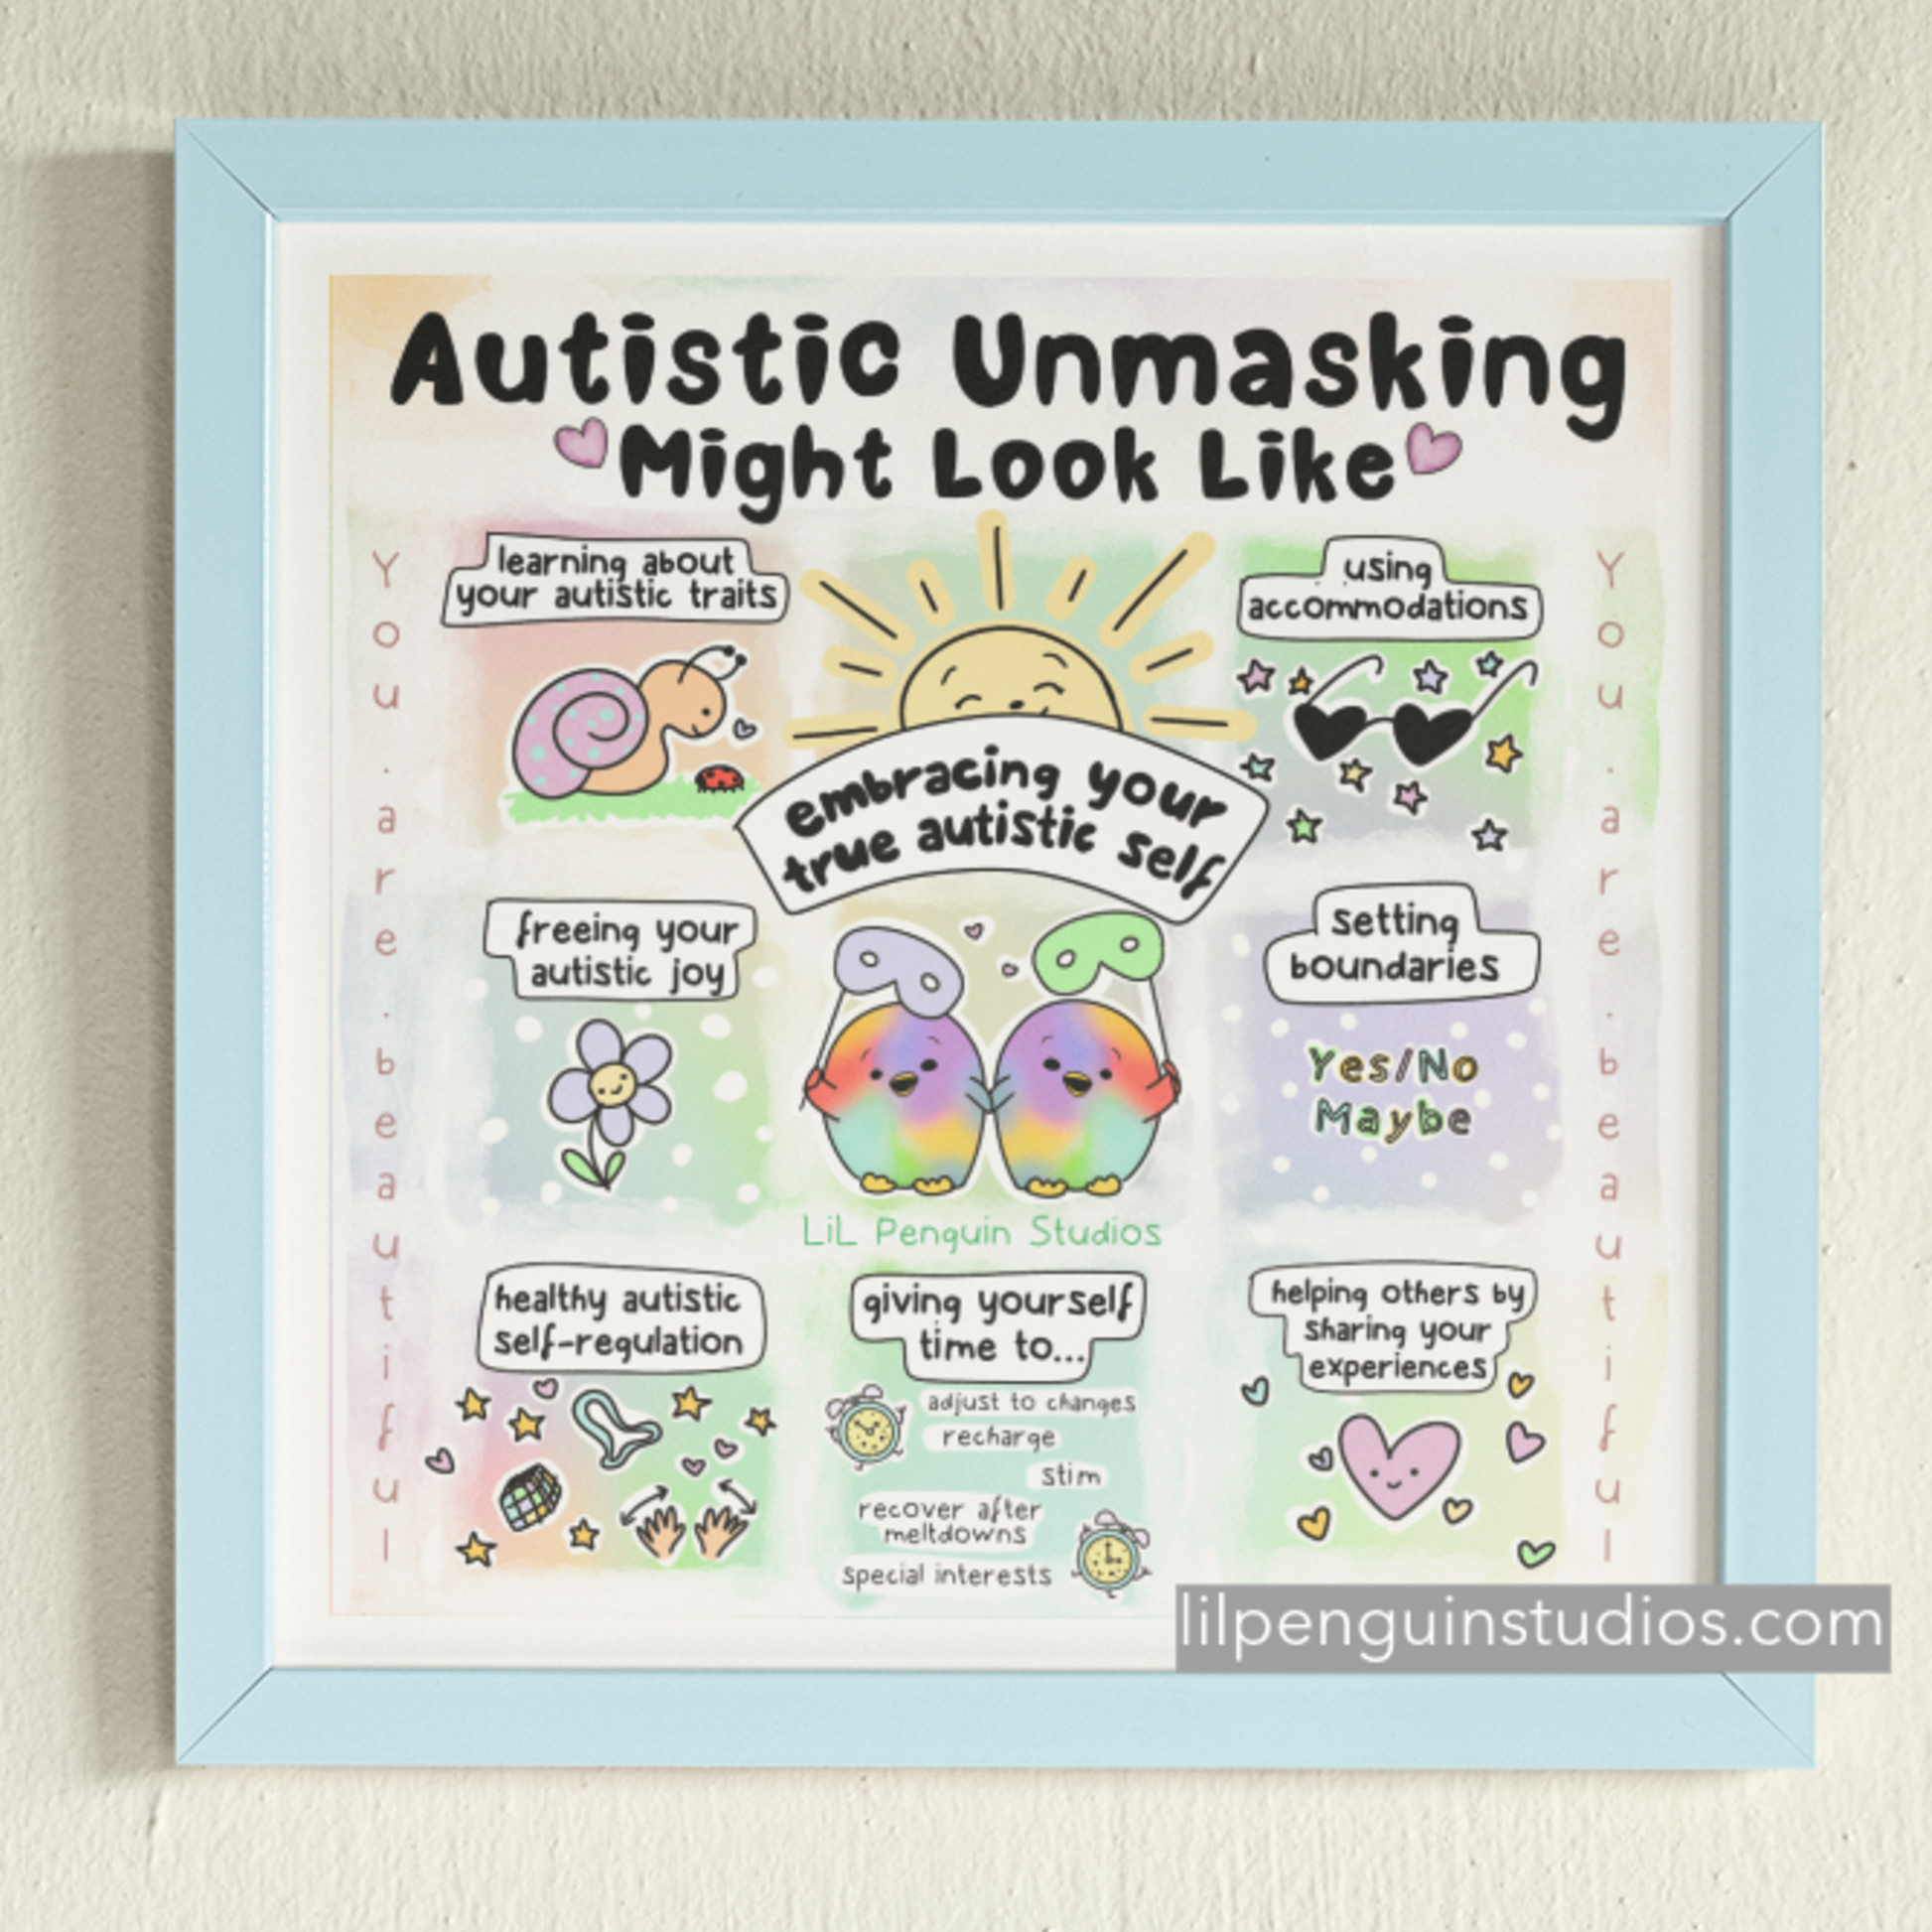 Autistic unmasking digital poster